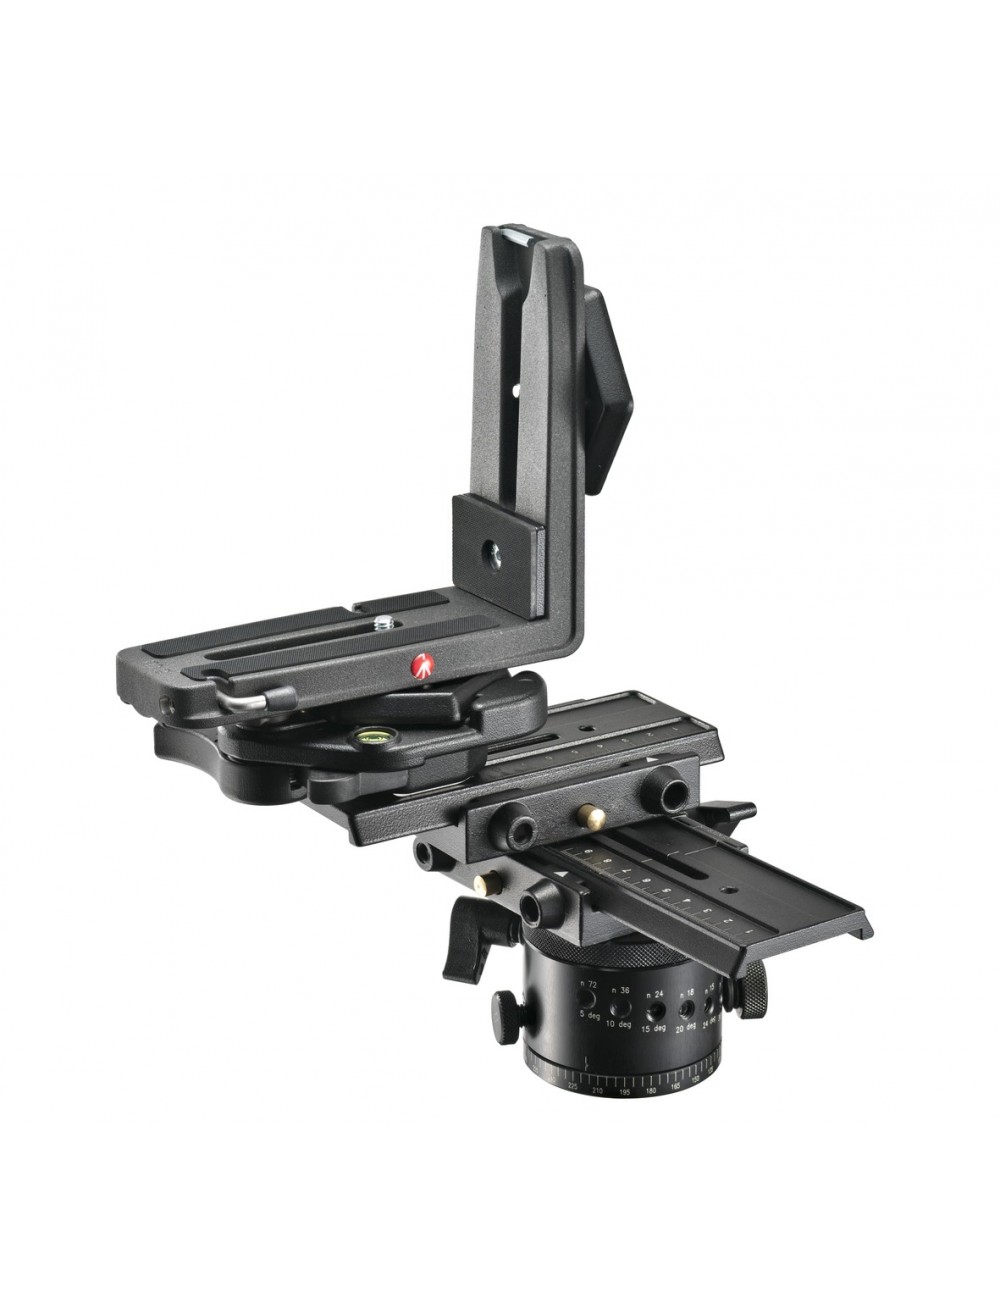 Panoramakopf MH057A5 Manfrotto - 
Präziser Virtual-Reality- und Panoramakopf
Langlebige Aluminium-Konstruktion
Kamera kann